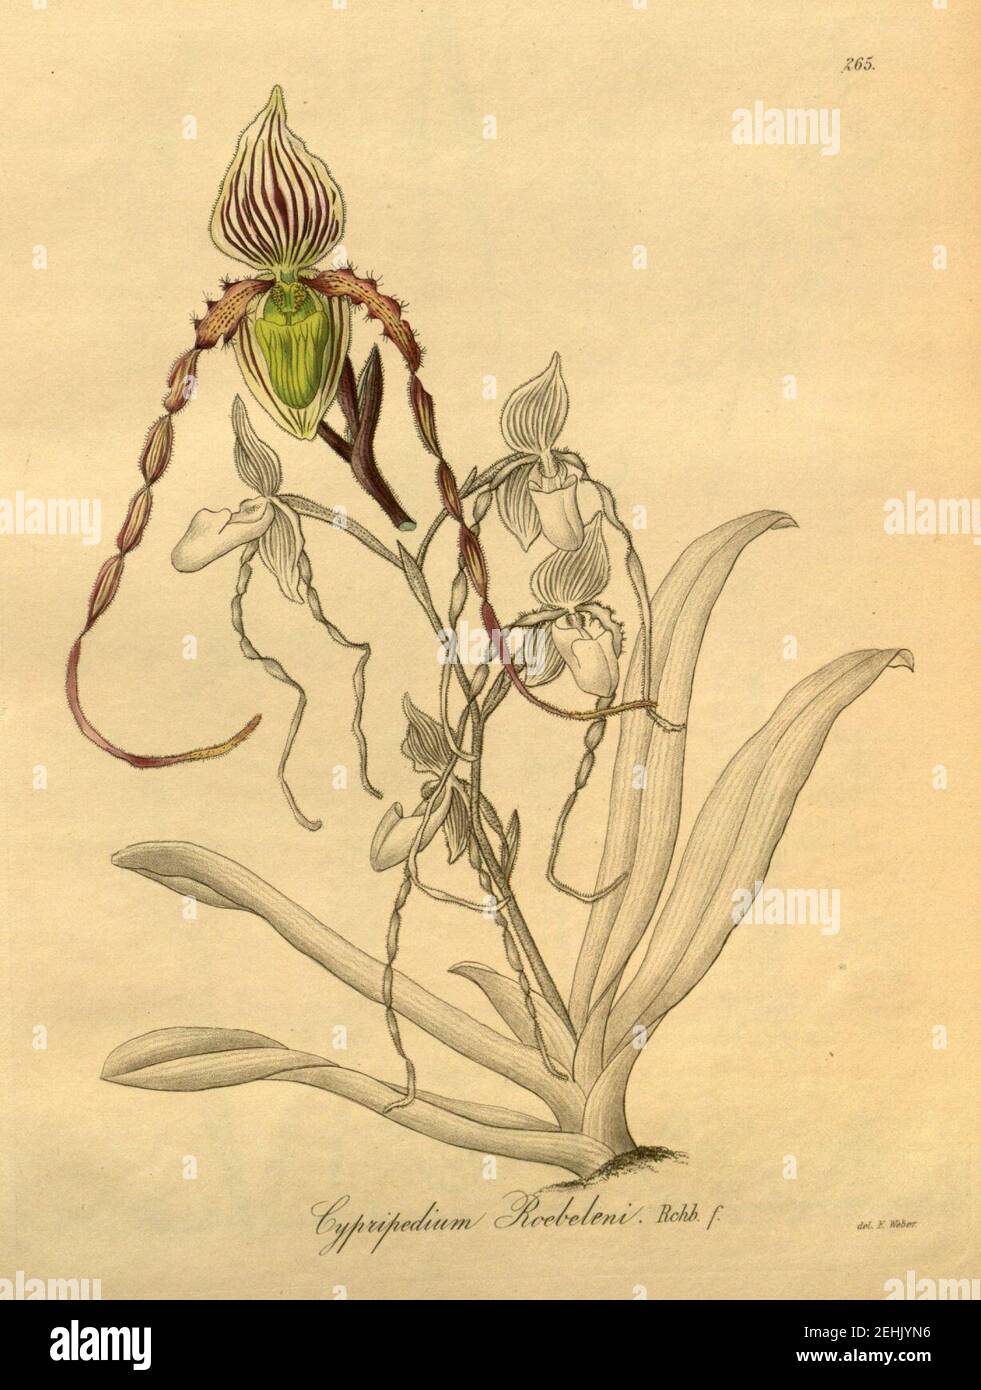 Paphiopedilum philippinense var. roebelenii (as Cypripedium roebelenii) - Xenia 3-265 (1893). Stock Photo